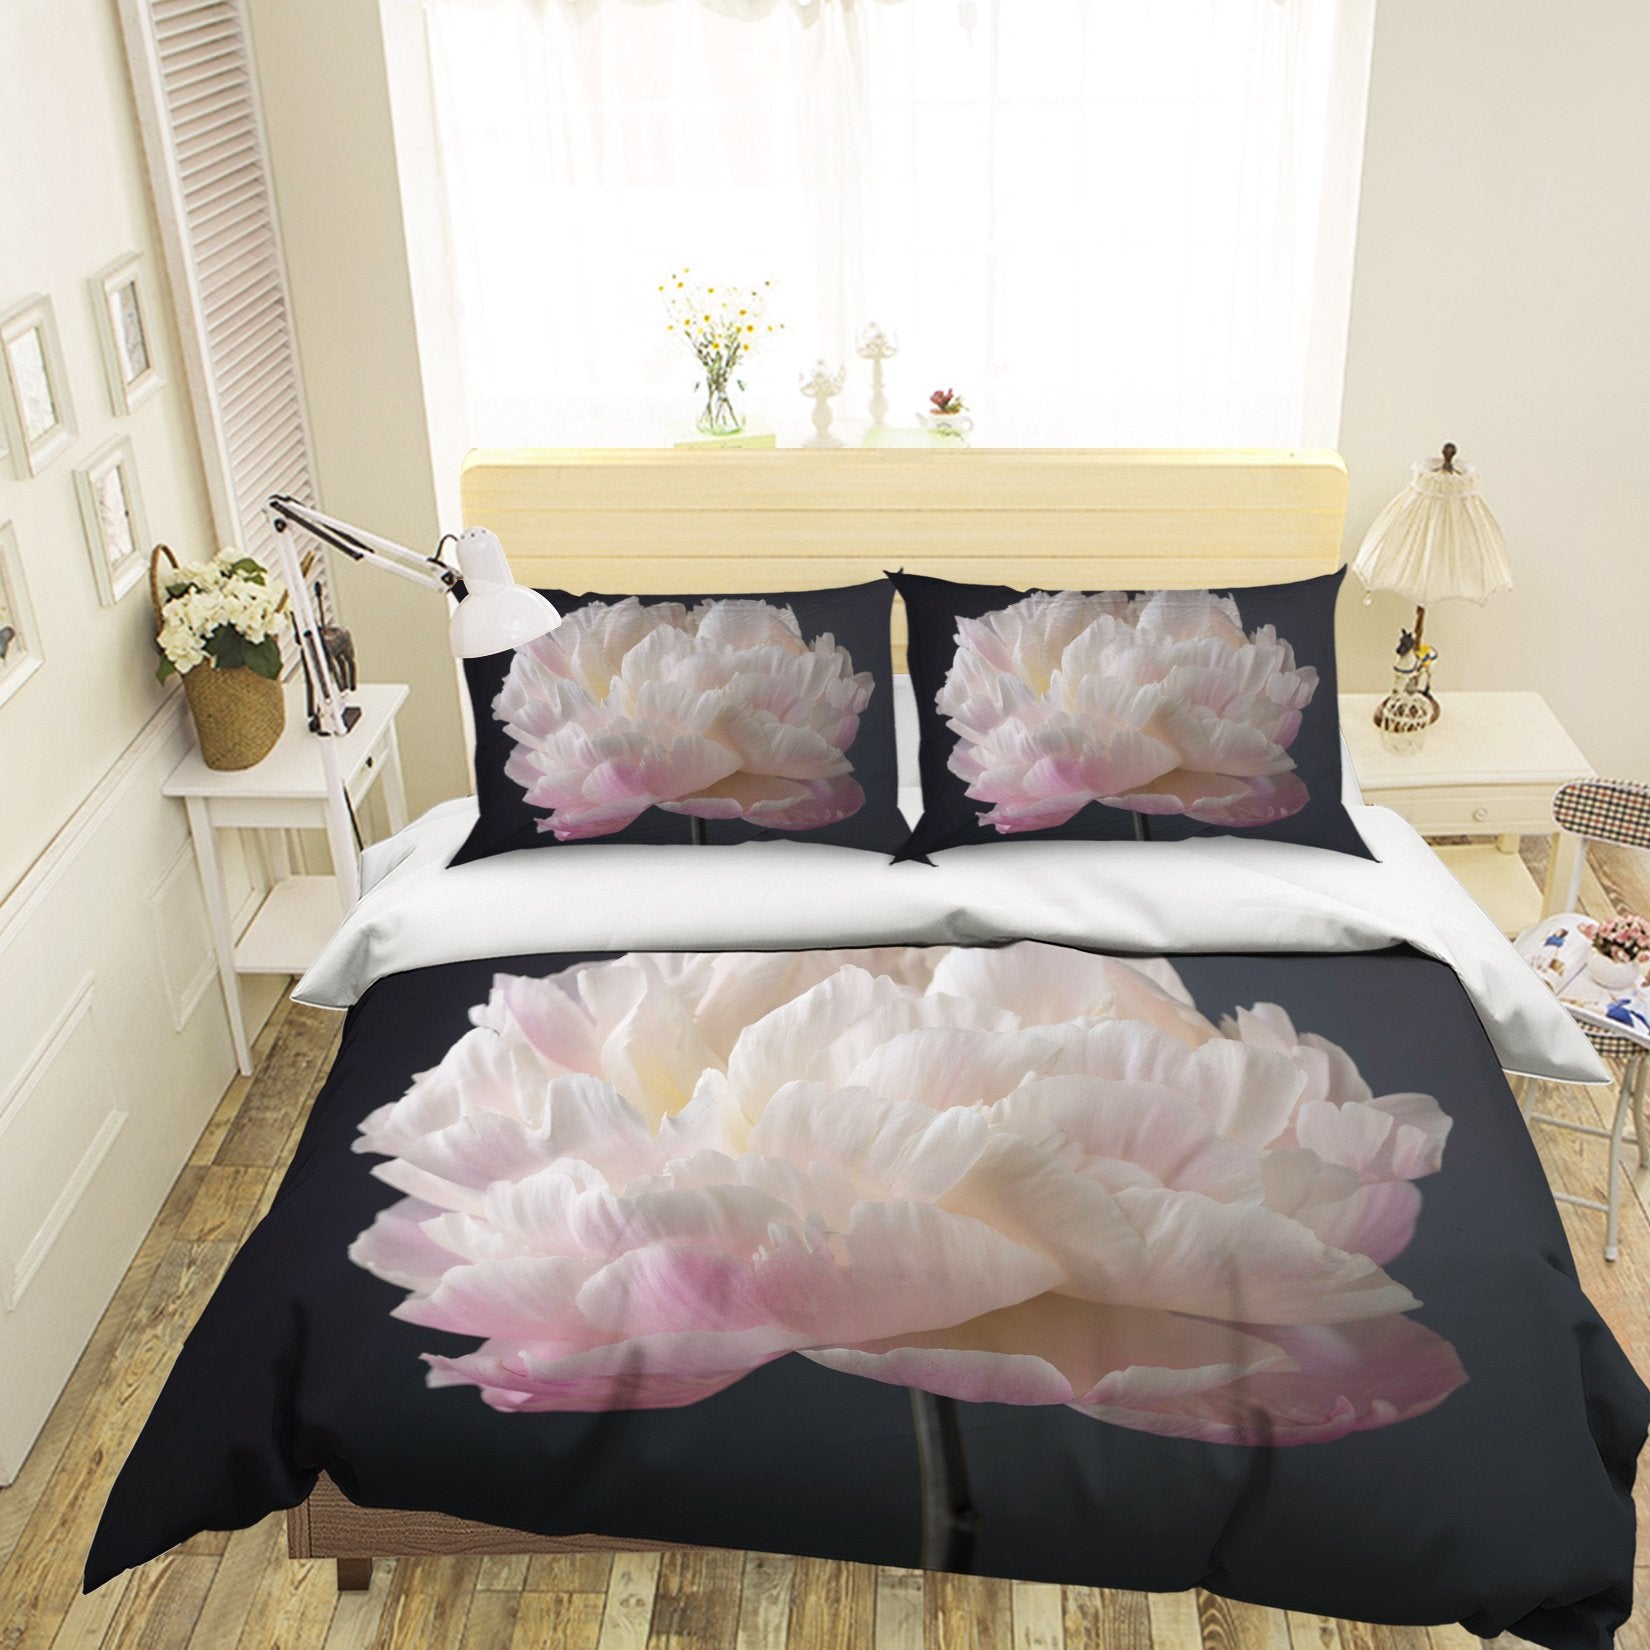 3D Beautiful Flowers 2014 Assaf Frank Bedding Bed Pillowcases Quilt Quiet Covers AJ Creativity Home 